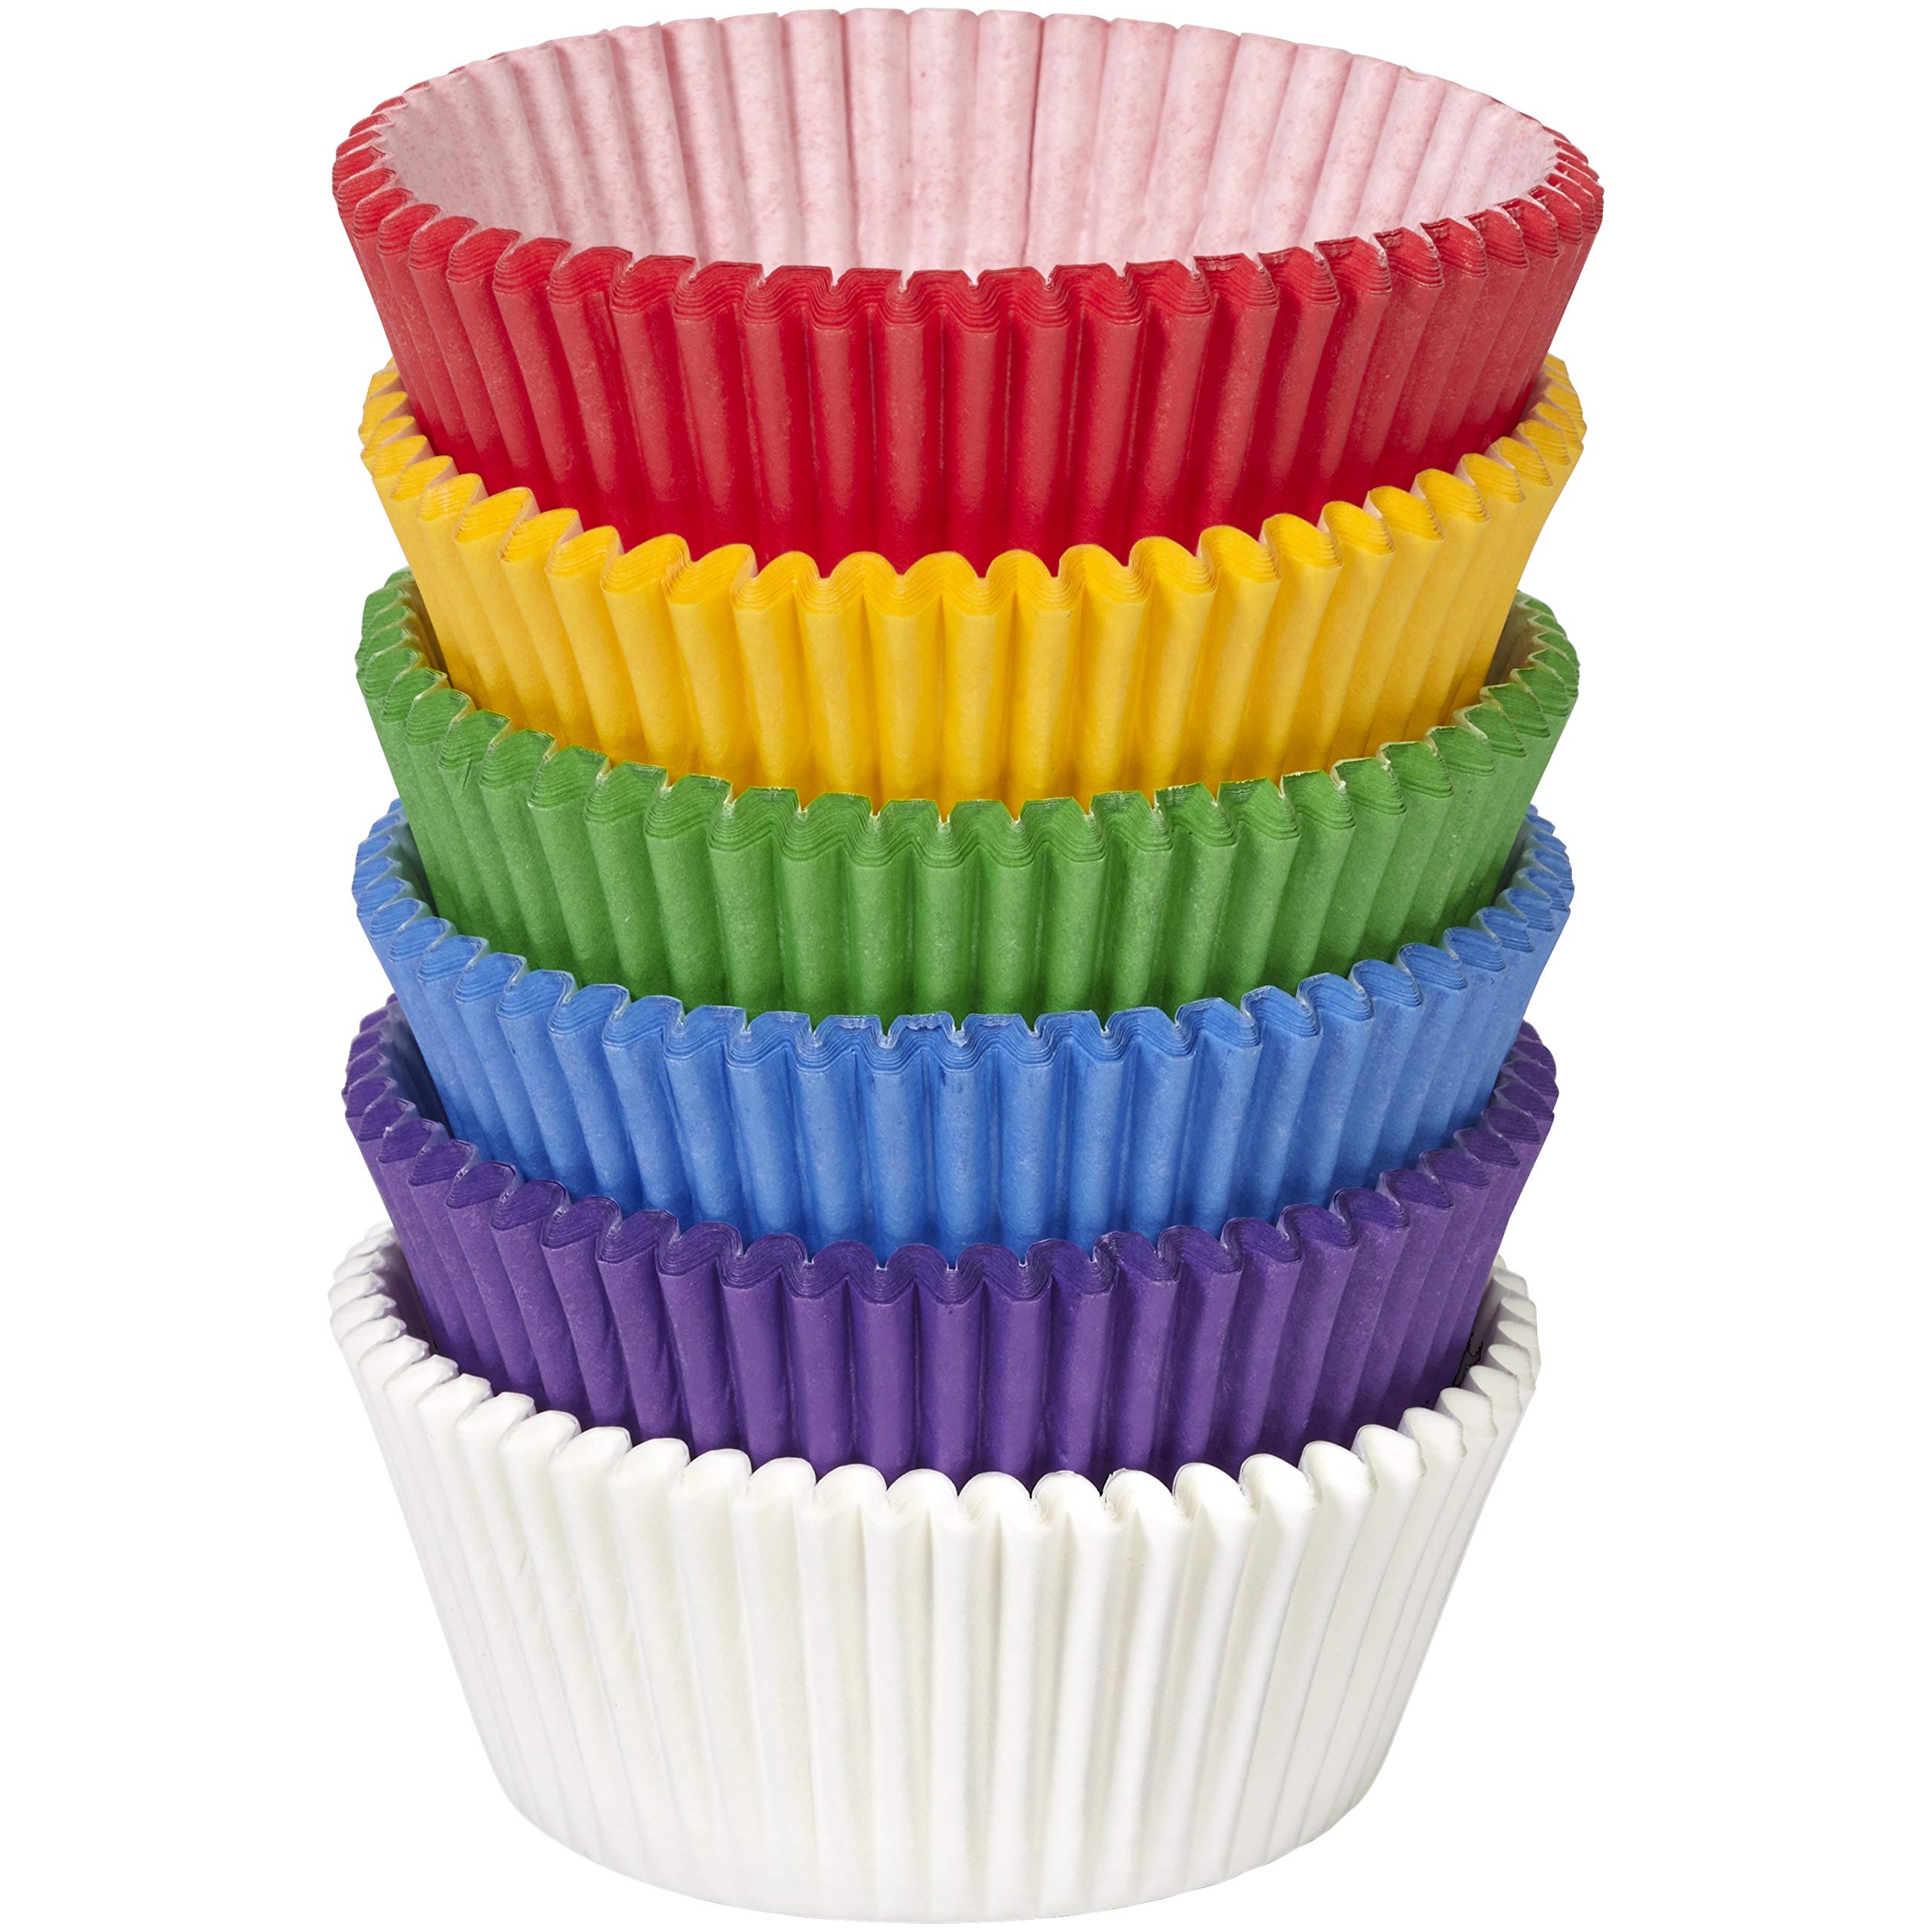 Wilton Baking Cups, Rainbow Assorted, 150 ct